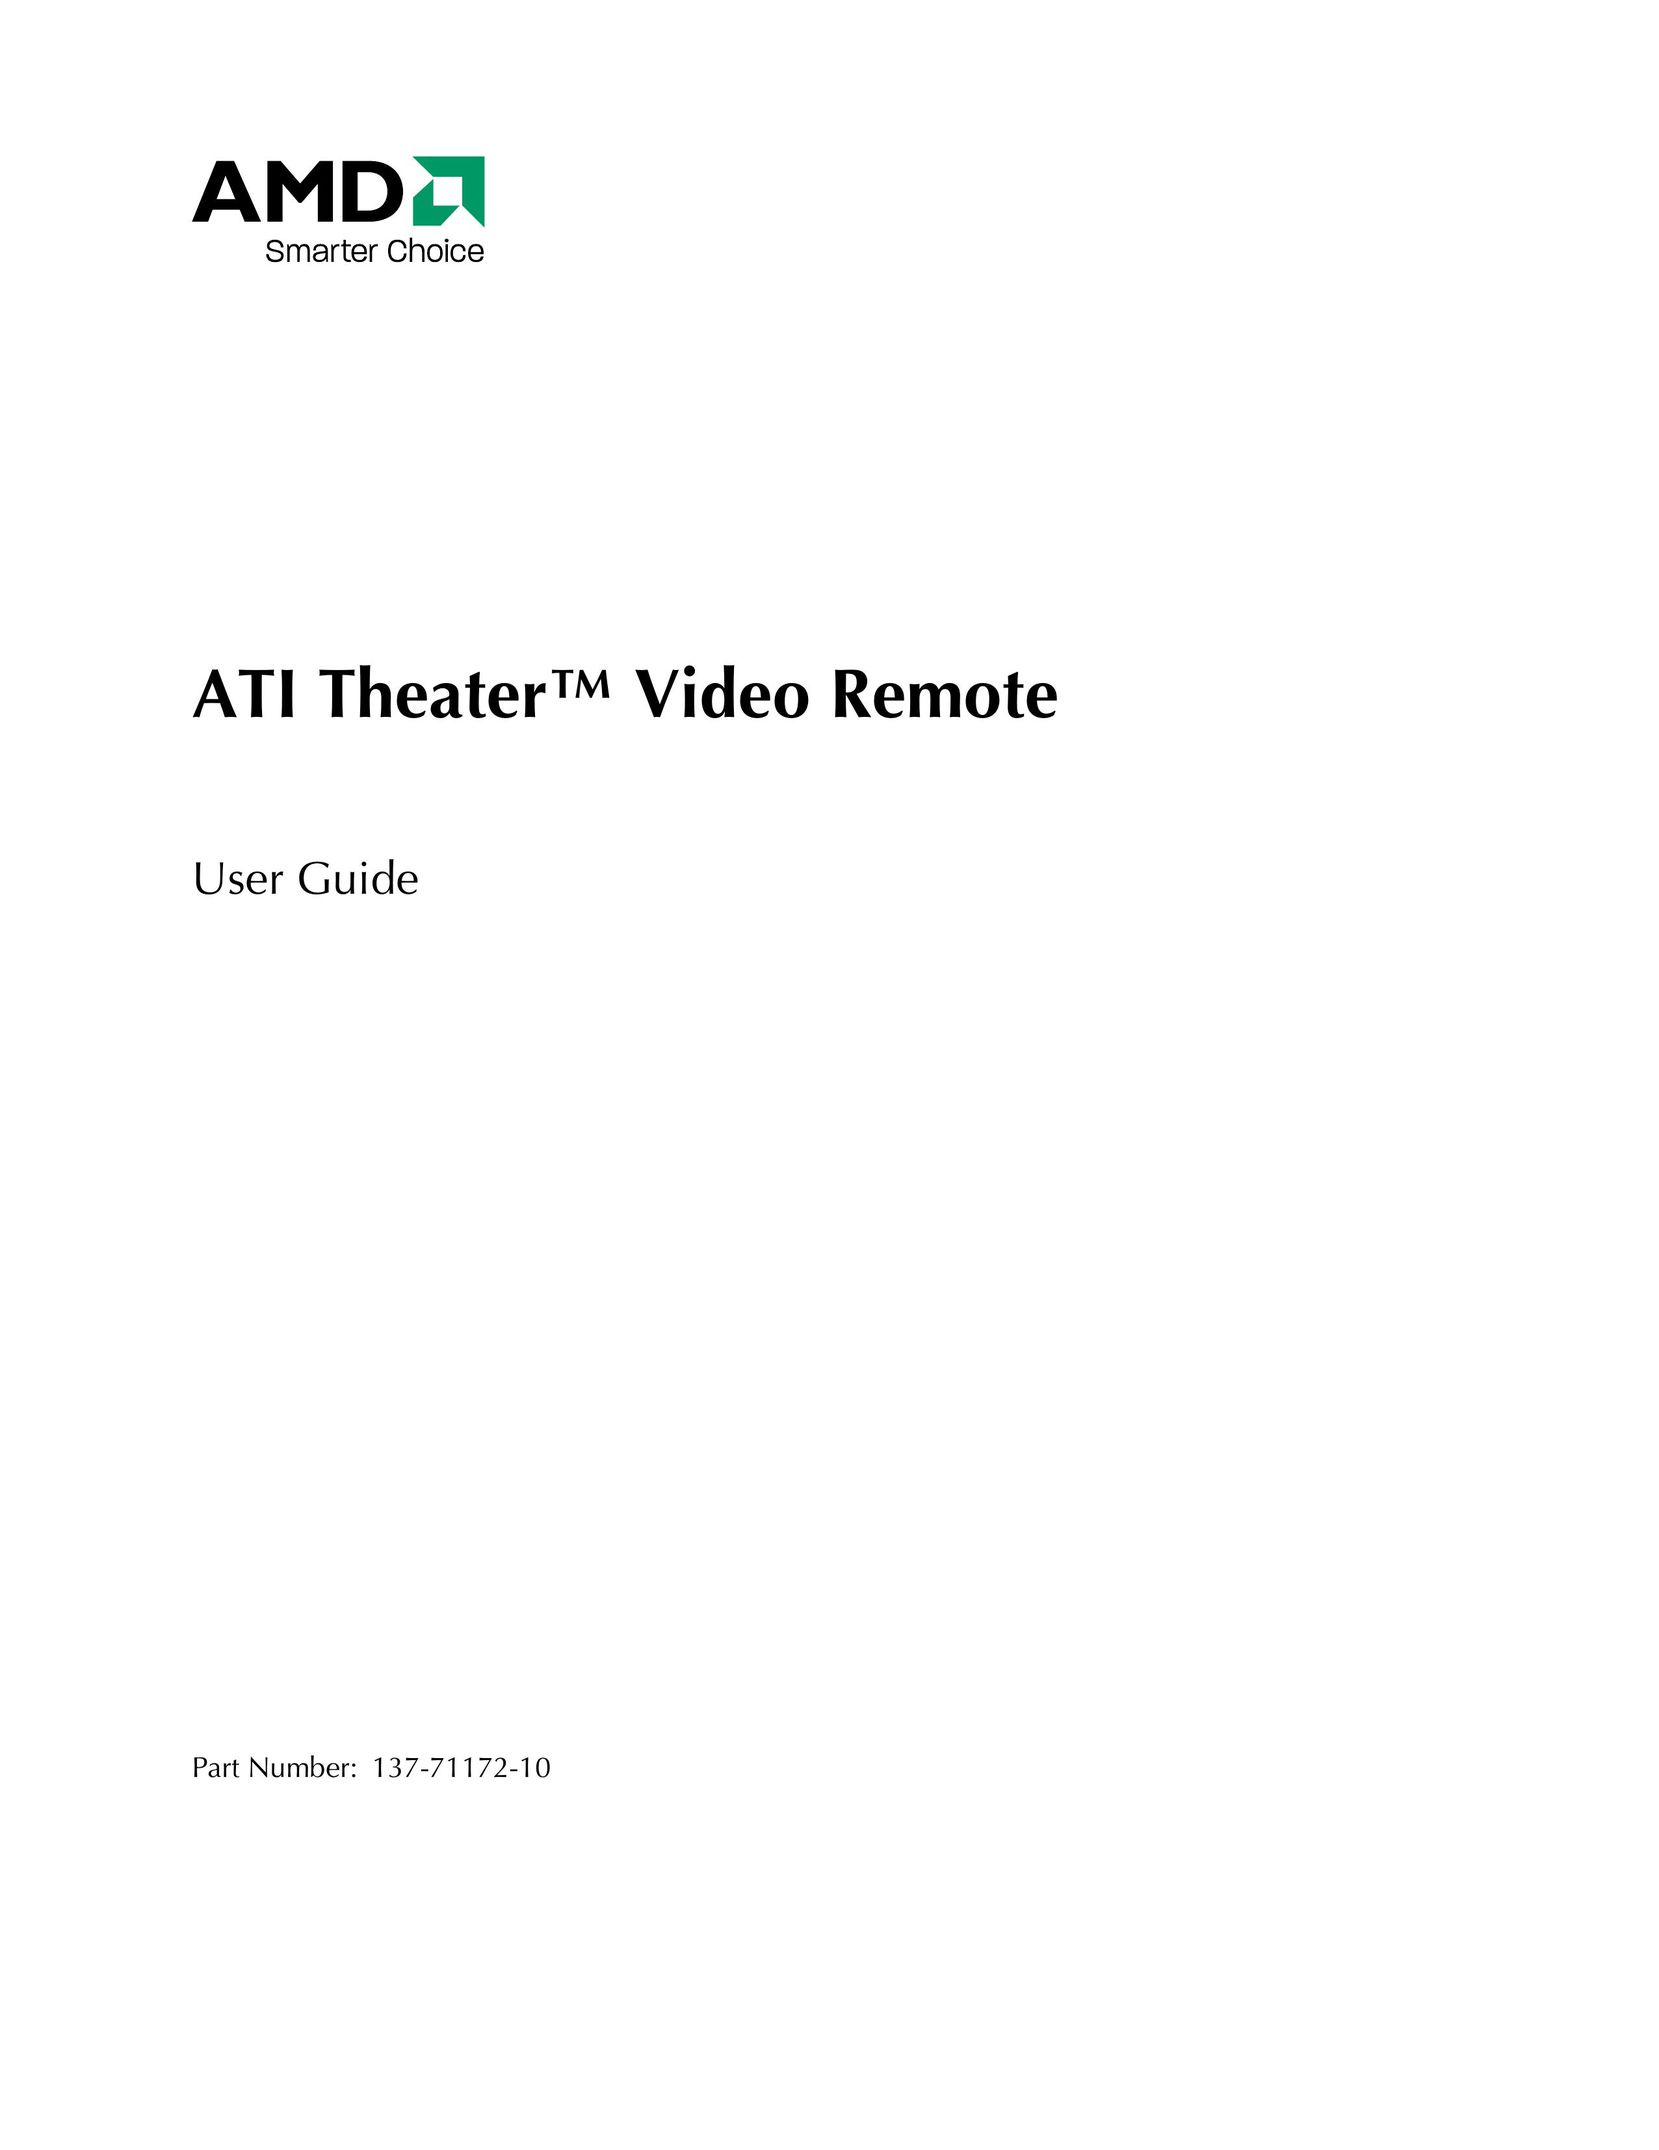 AMD ATI Theater Universal Remote User Manual